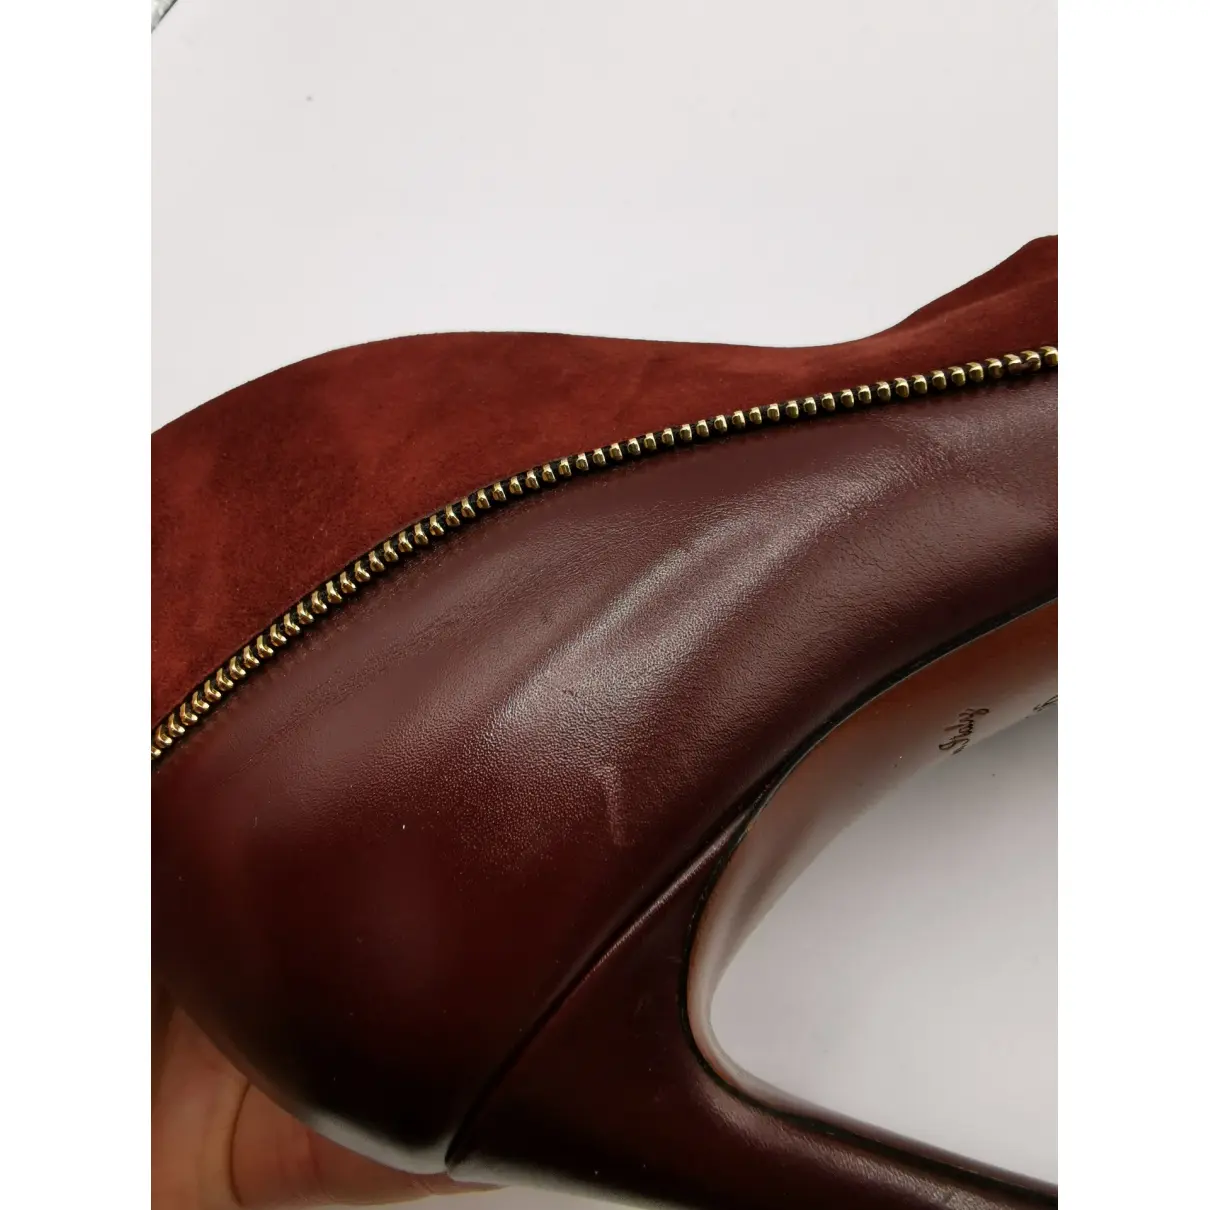 Leather heels Louis Vuitton